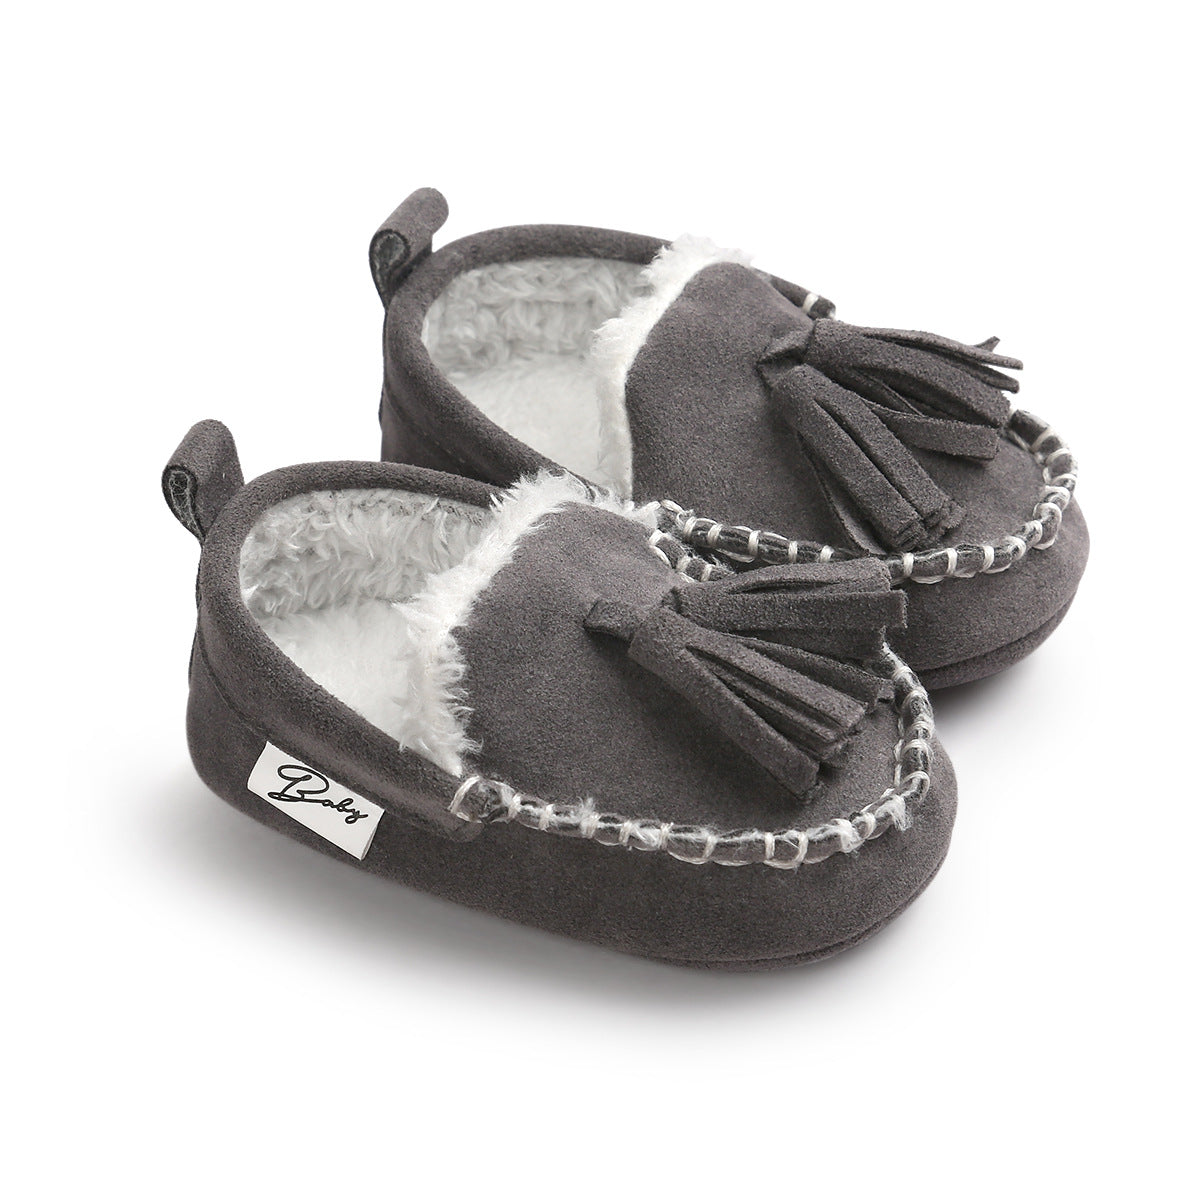 Super Warm Soft Bottom Anti-slip shoes Crib shoes